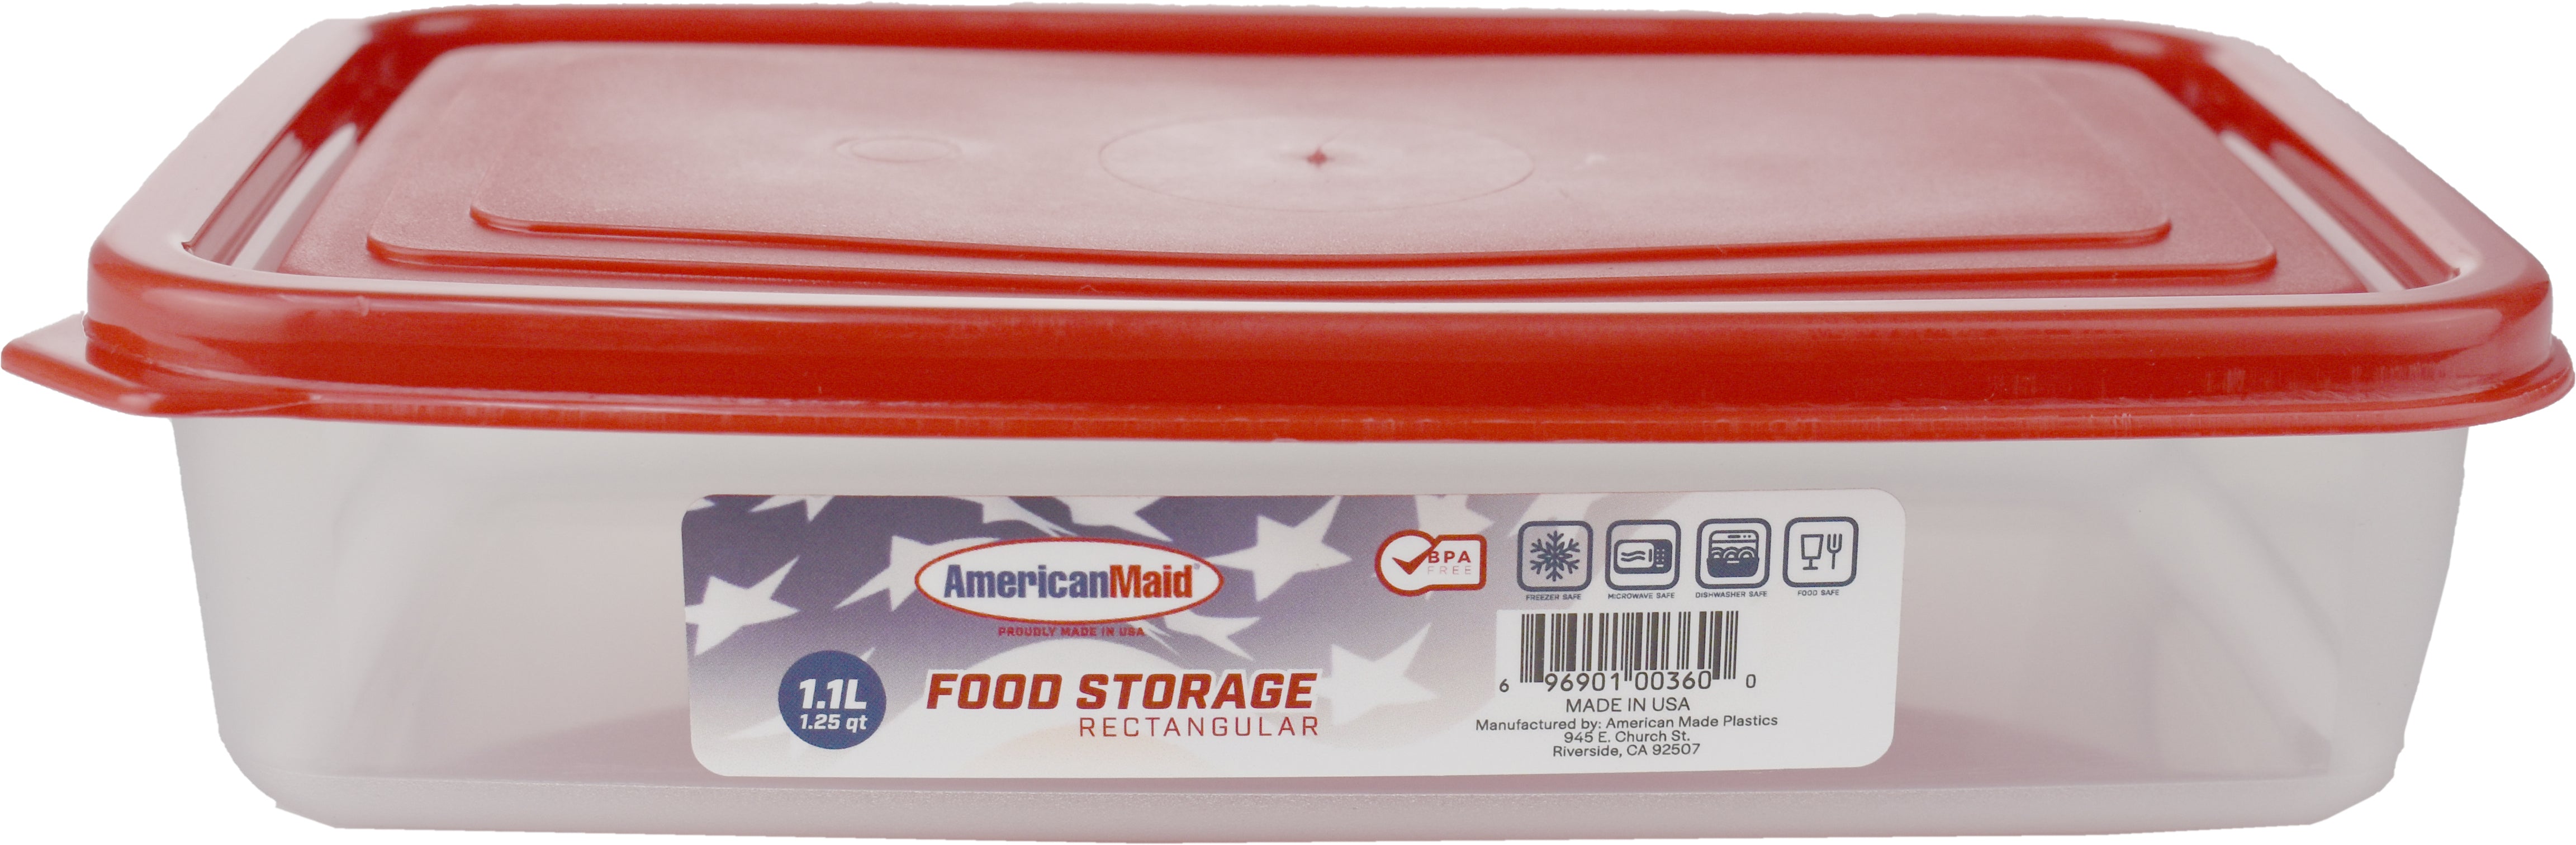 American Made 1.06L Rectangular Food Storage